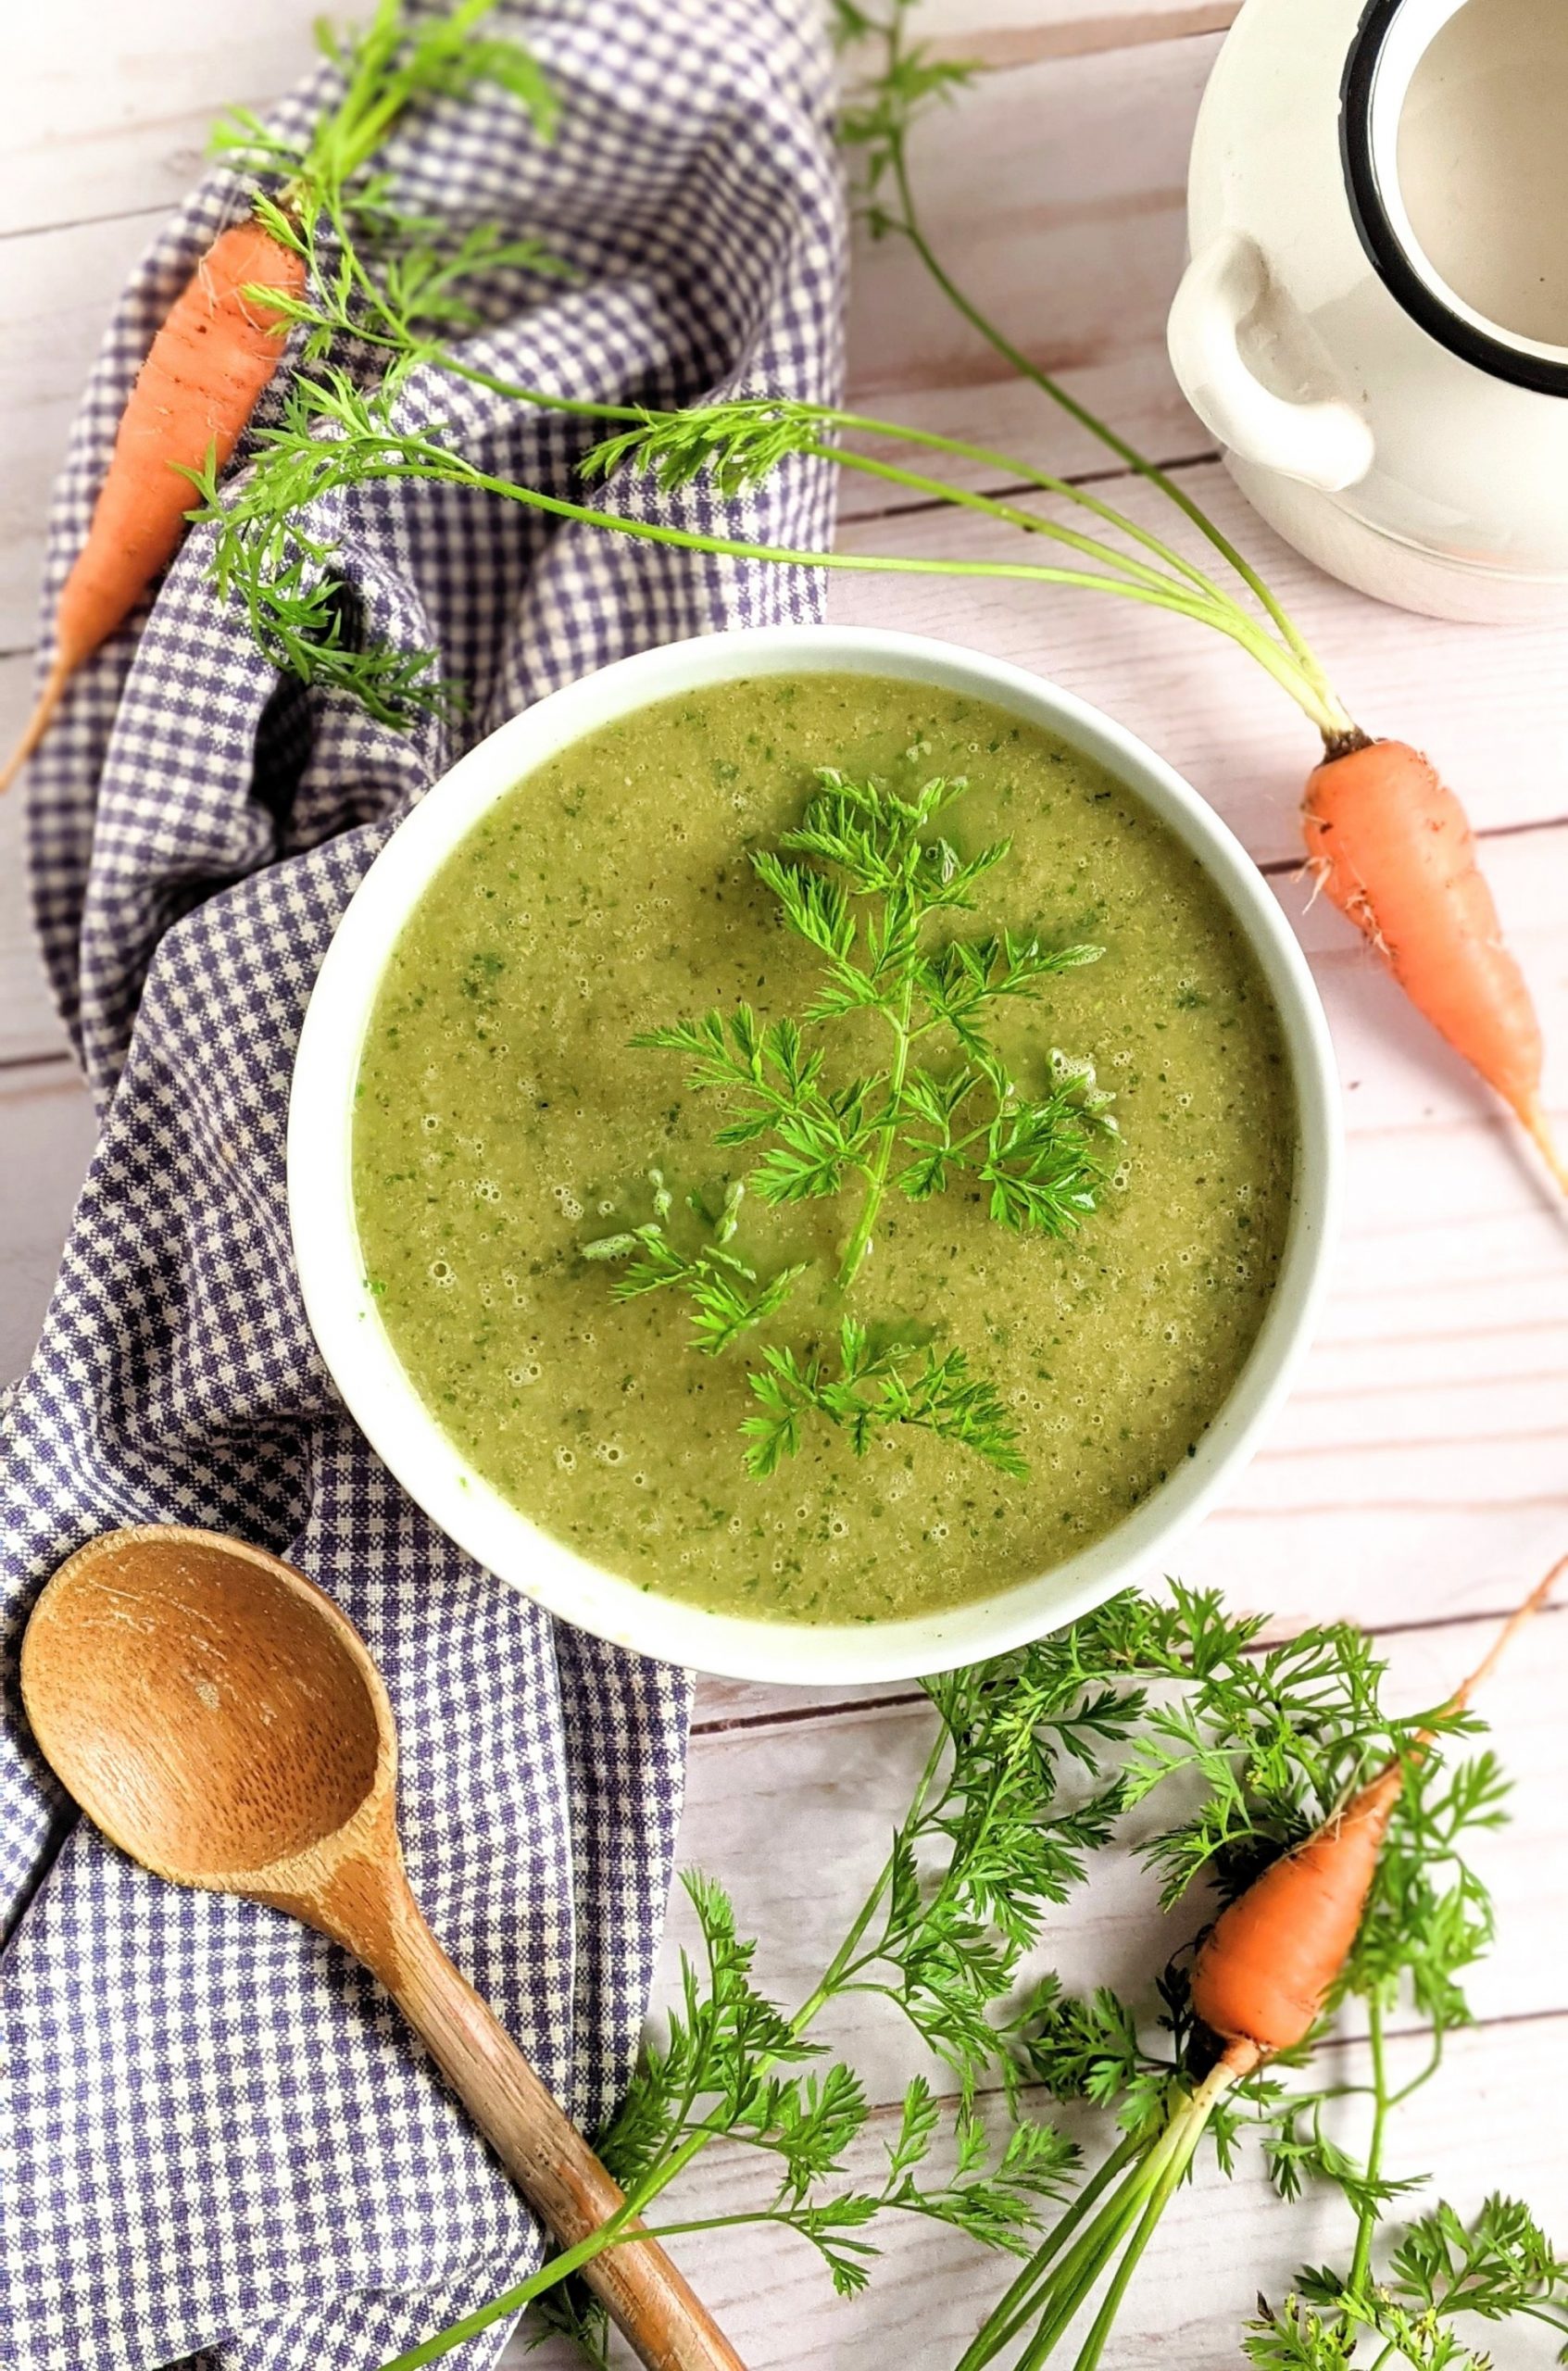 carrot top soup recipes hely ways to cook carrot greens soup vegan gluten free garden carrot green recipes